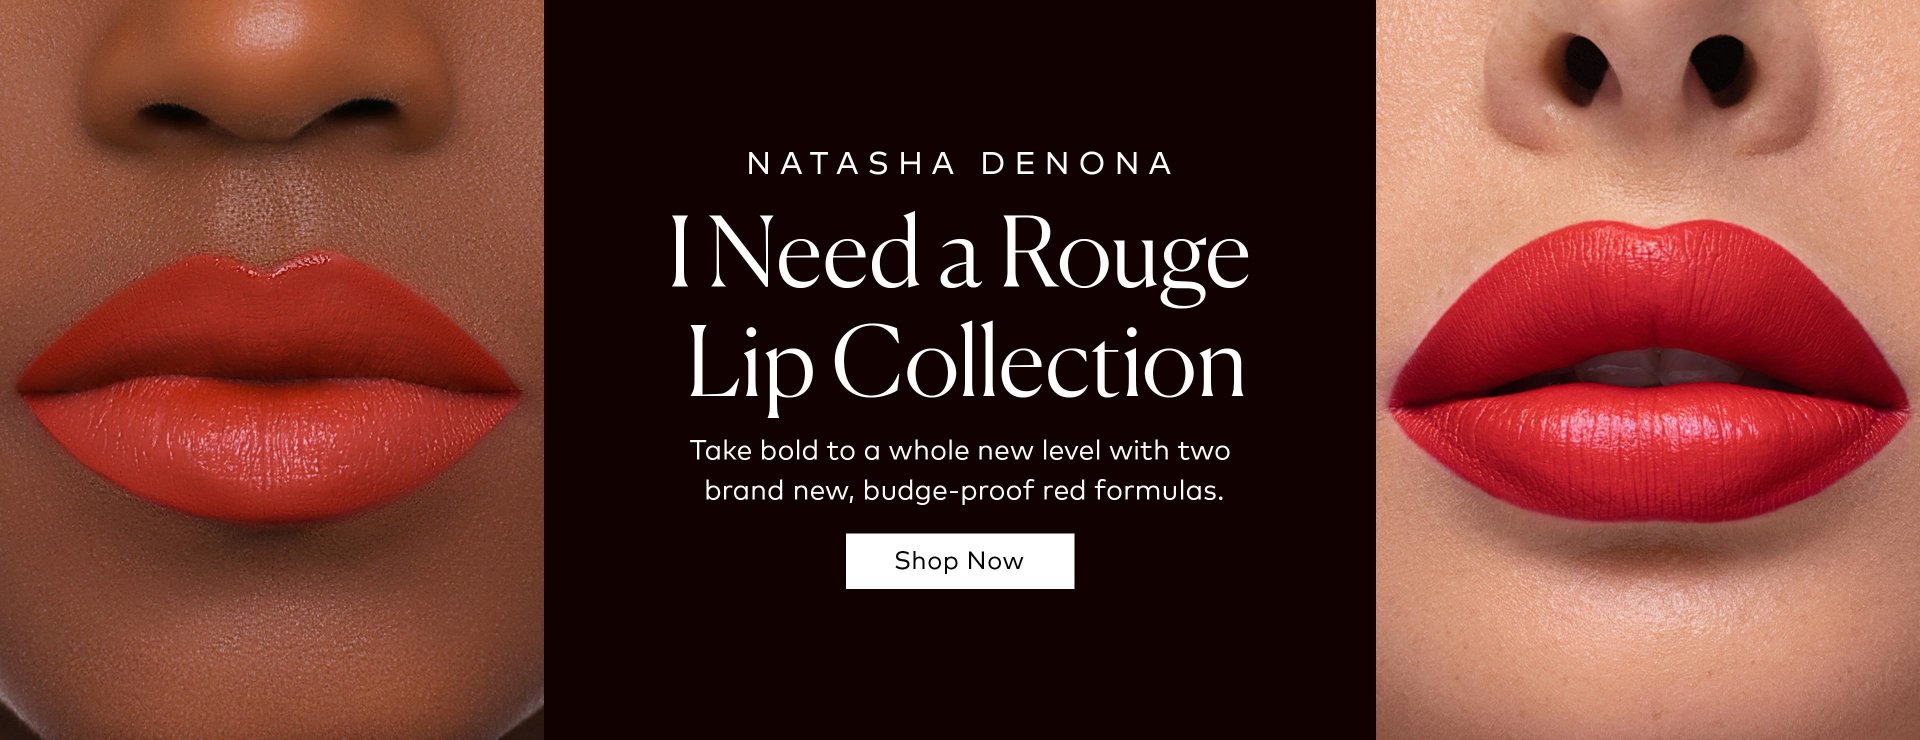 Shop the Natasha Denona I Need a Rouge Lip Collection on Beautylish.com